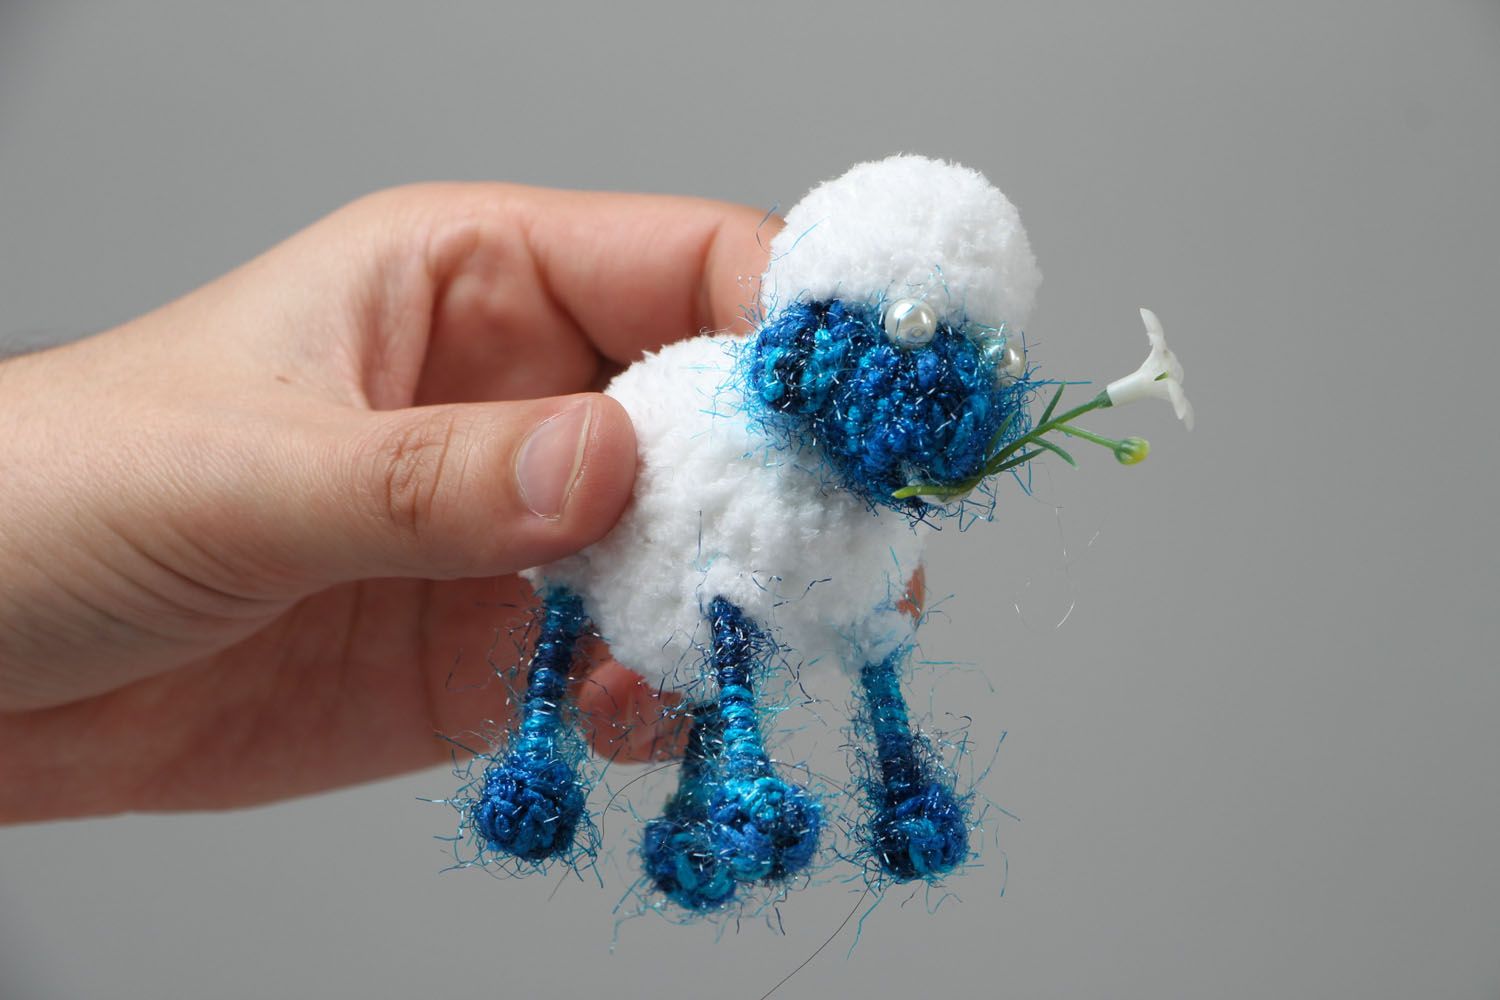 Homemade crochet toy photo 4